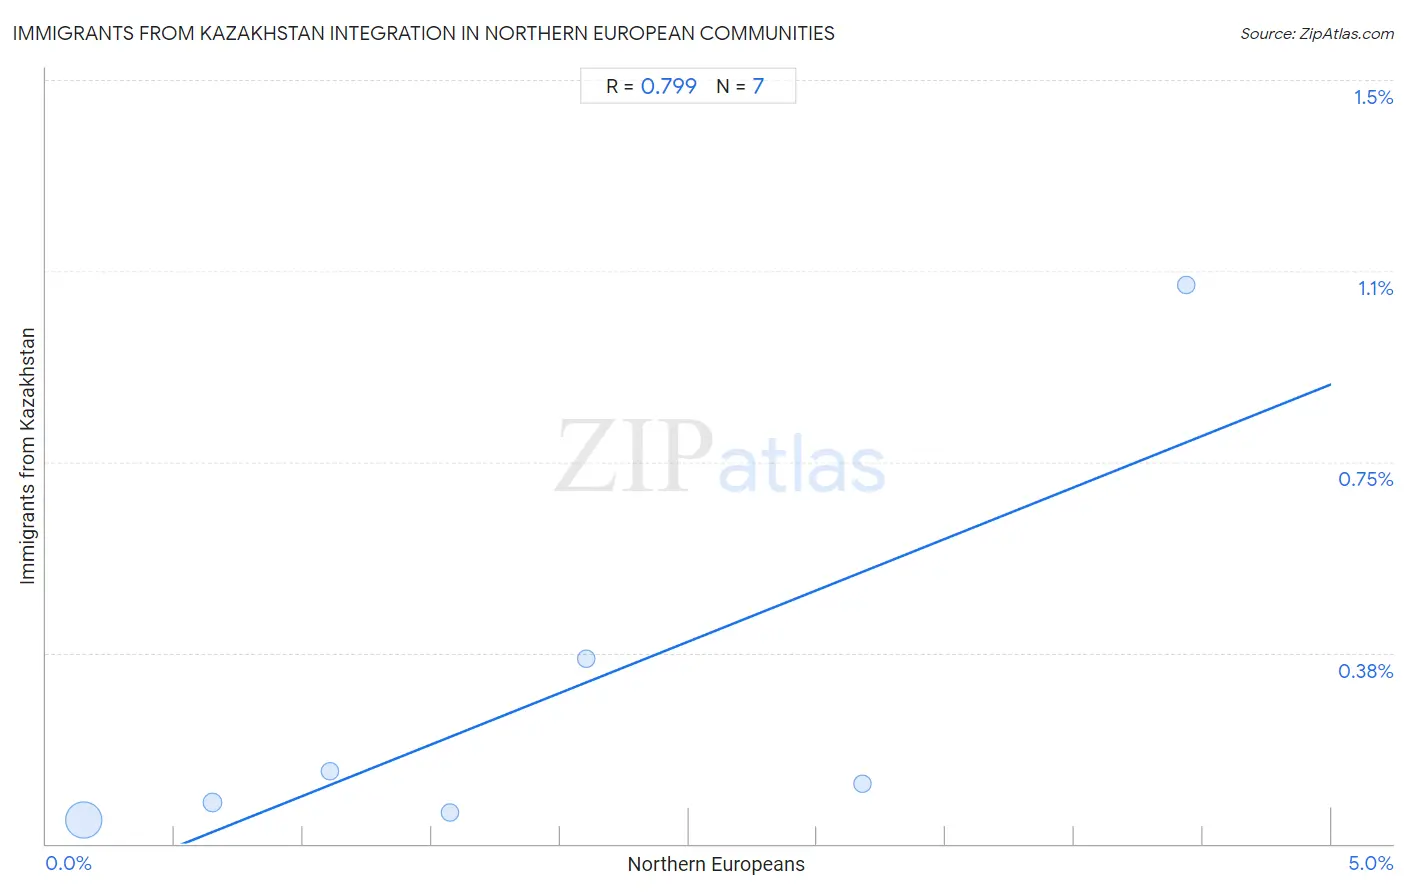 Northern European Integration in Immigrants from Kazakhstan Communities